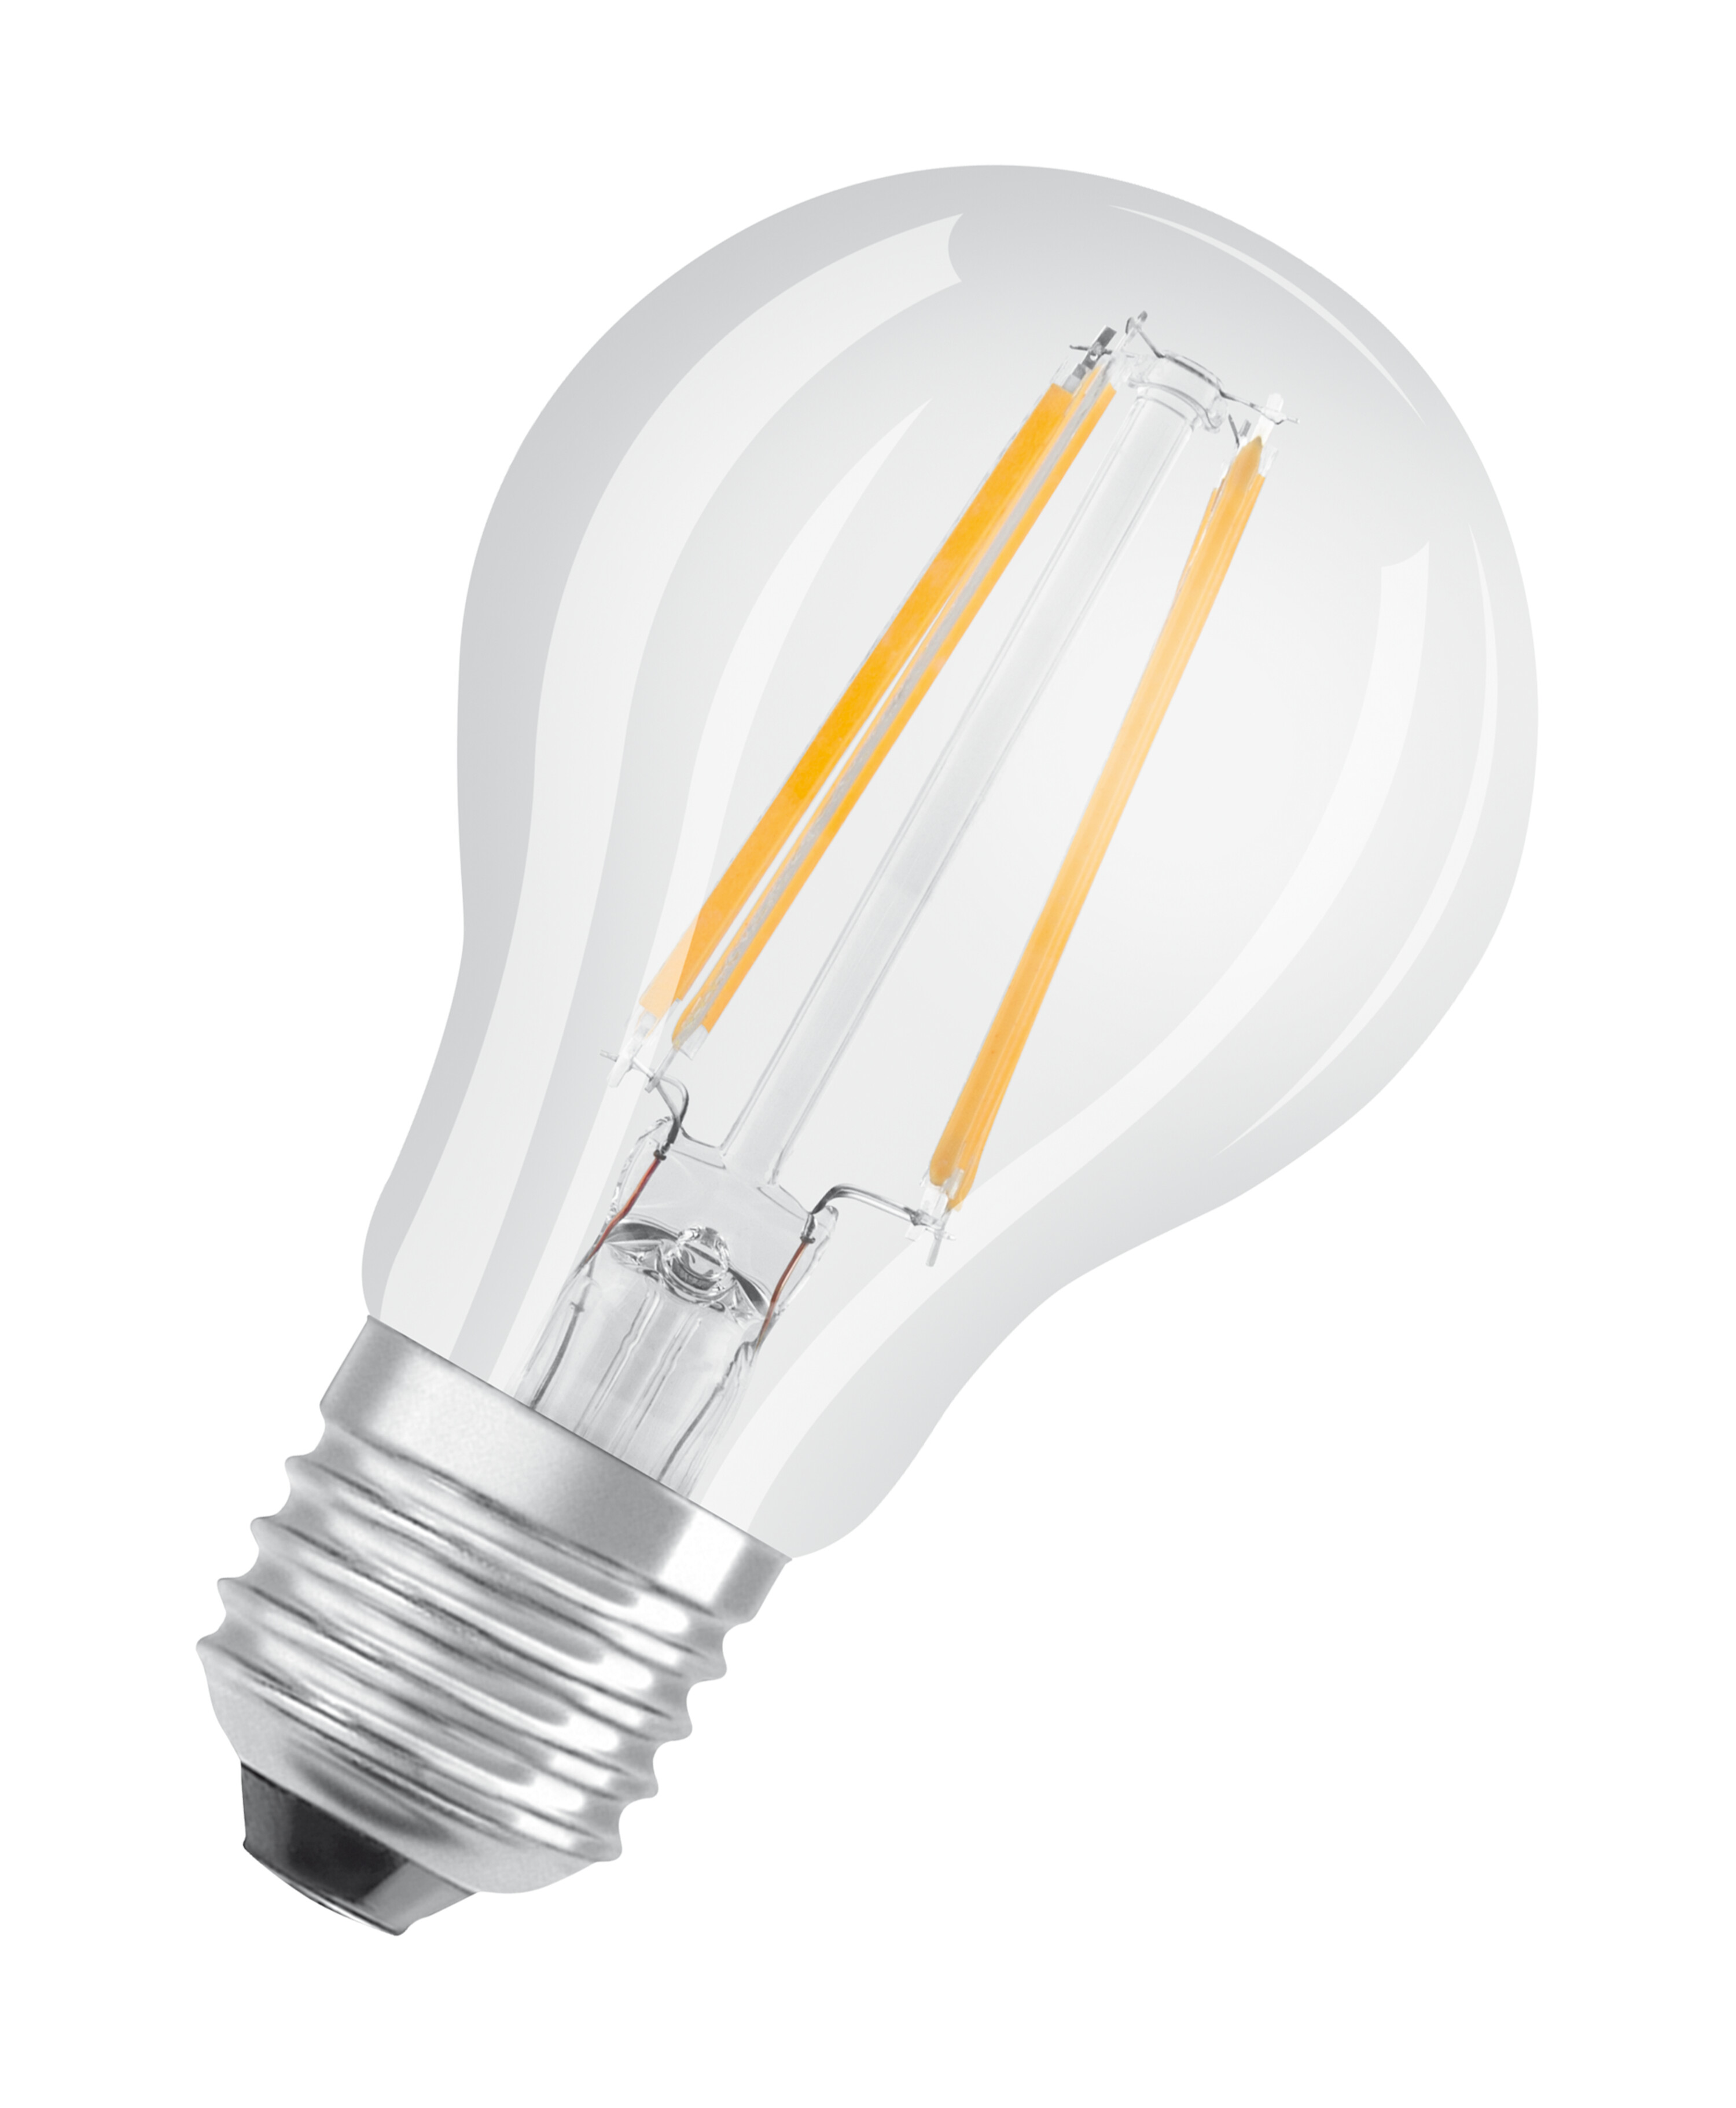 OSRAM  LED CLASSIC Retrofit 806 Lampe LED Lumen A Kaltweiß